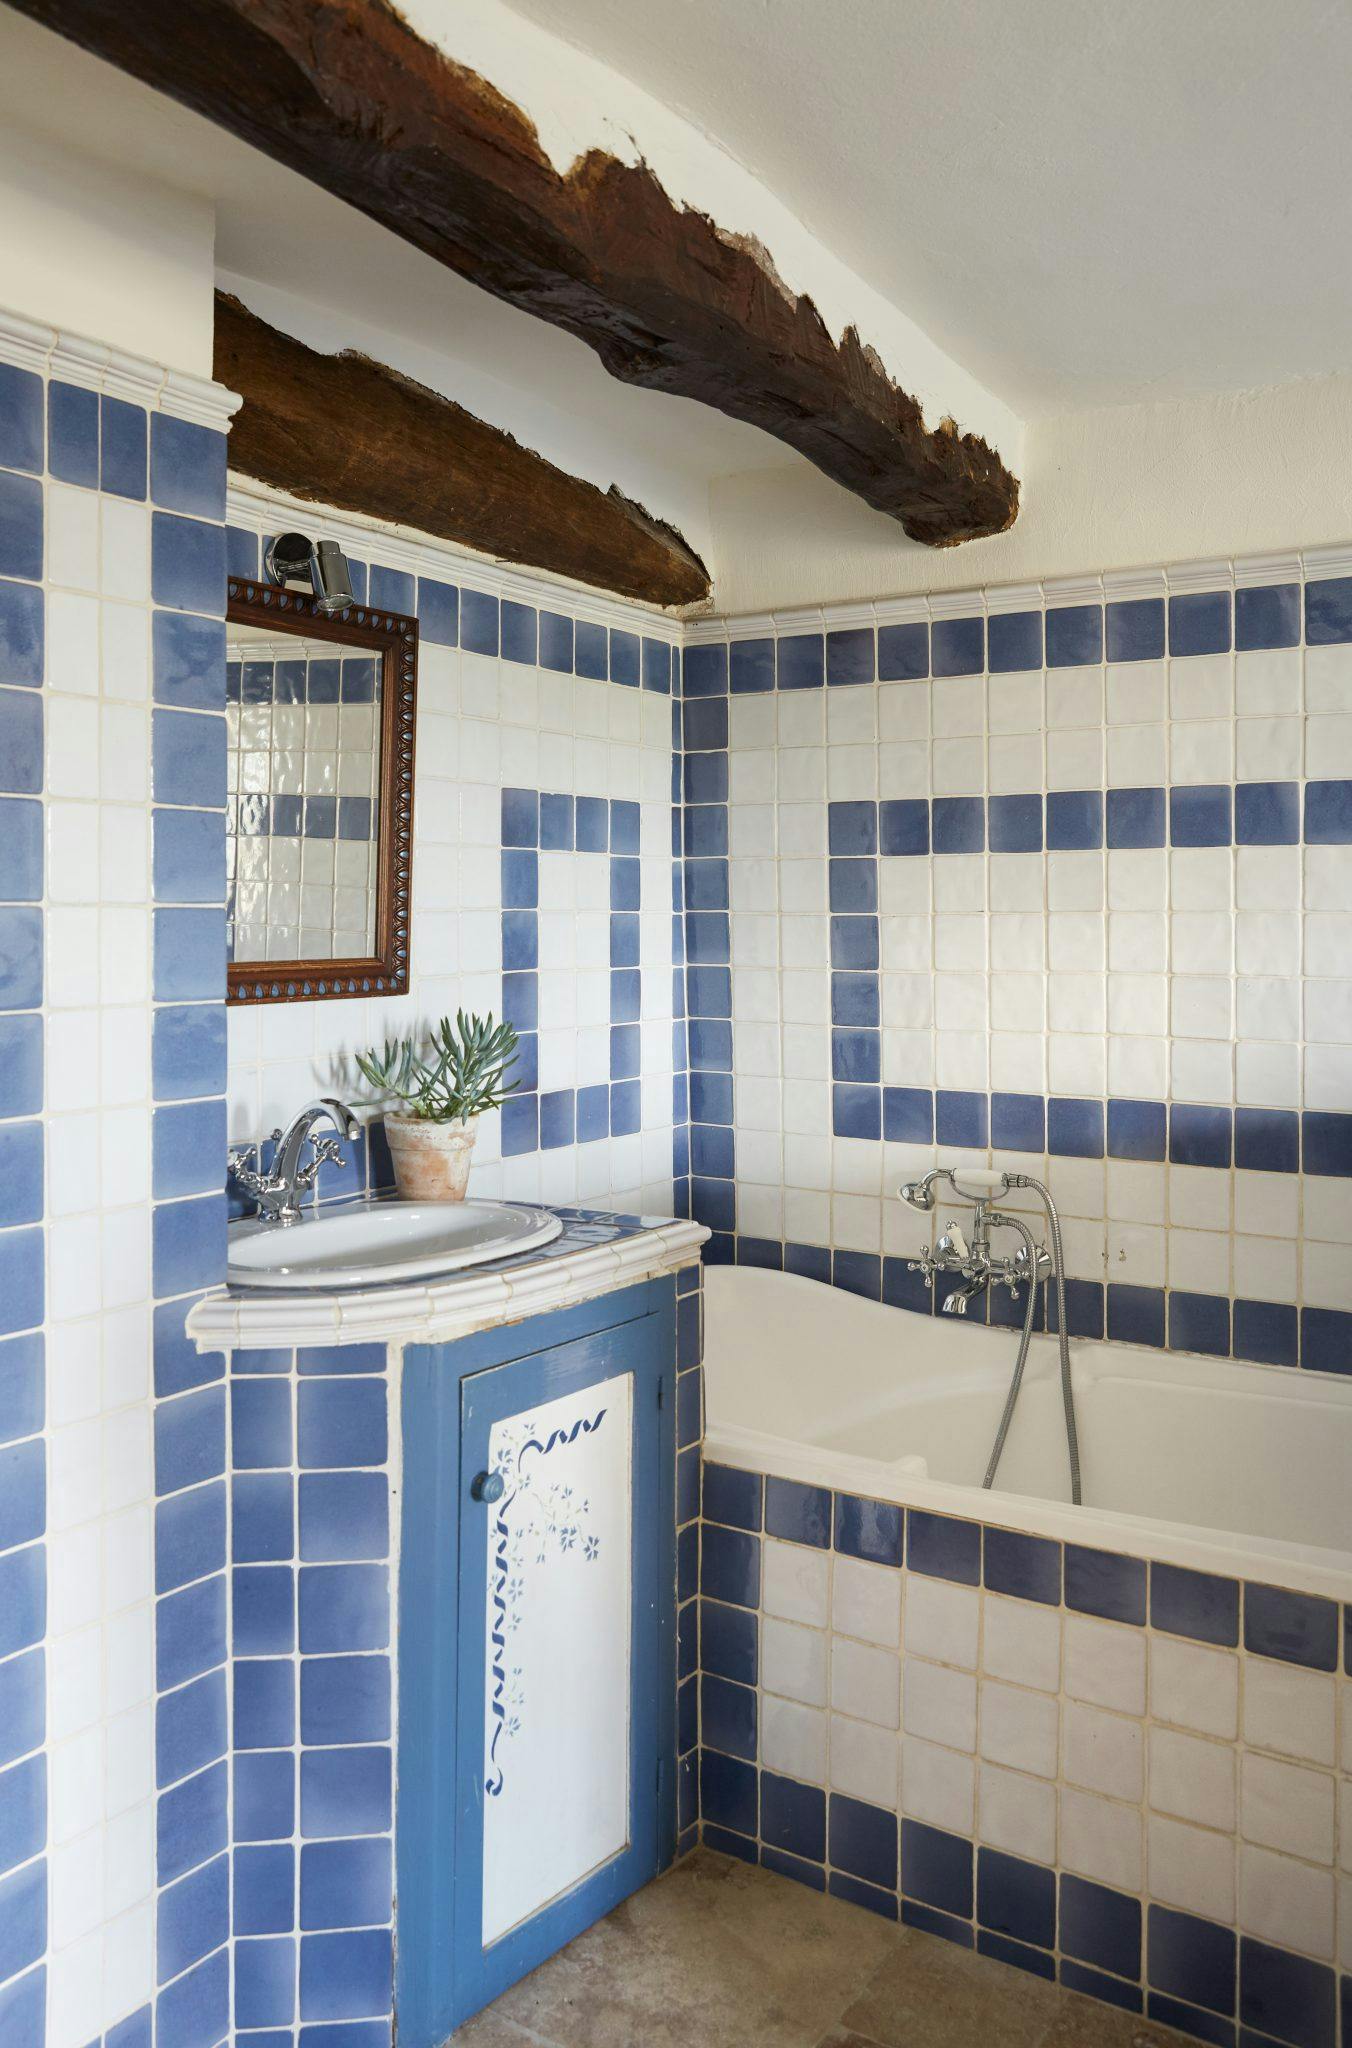 Bathroom with blue tiles and rectangular motifs and bathtub